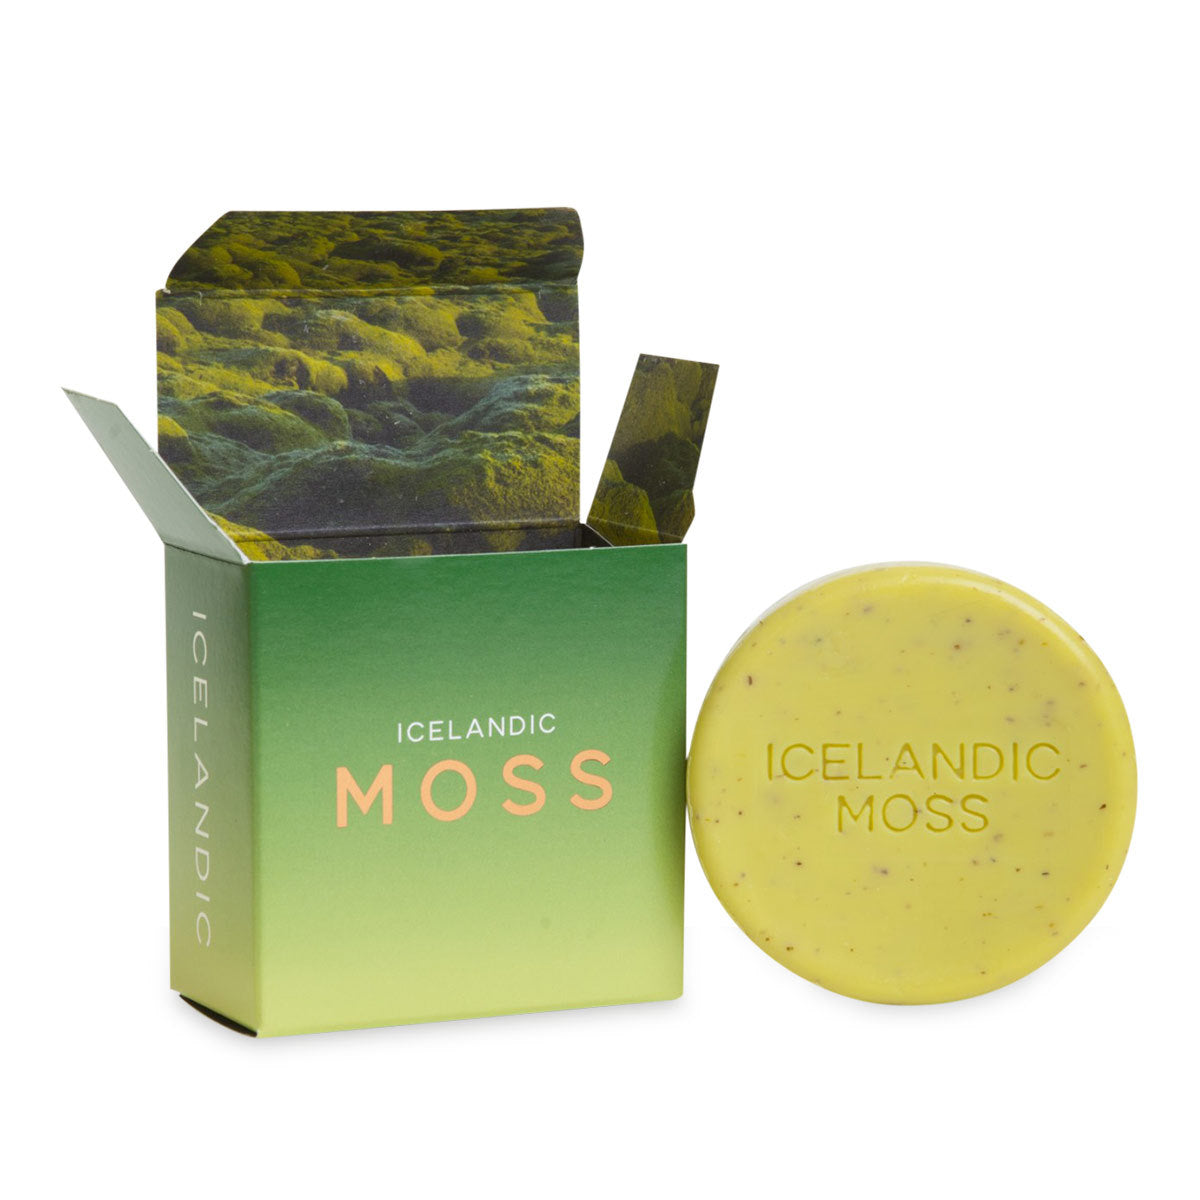 Primary image of Icelandic Moss Soap